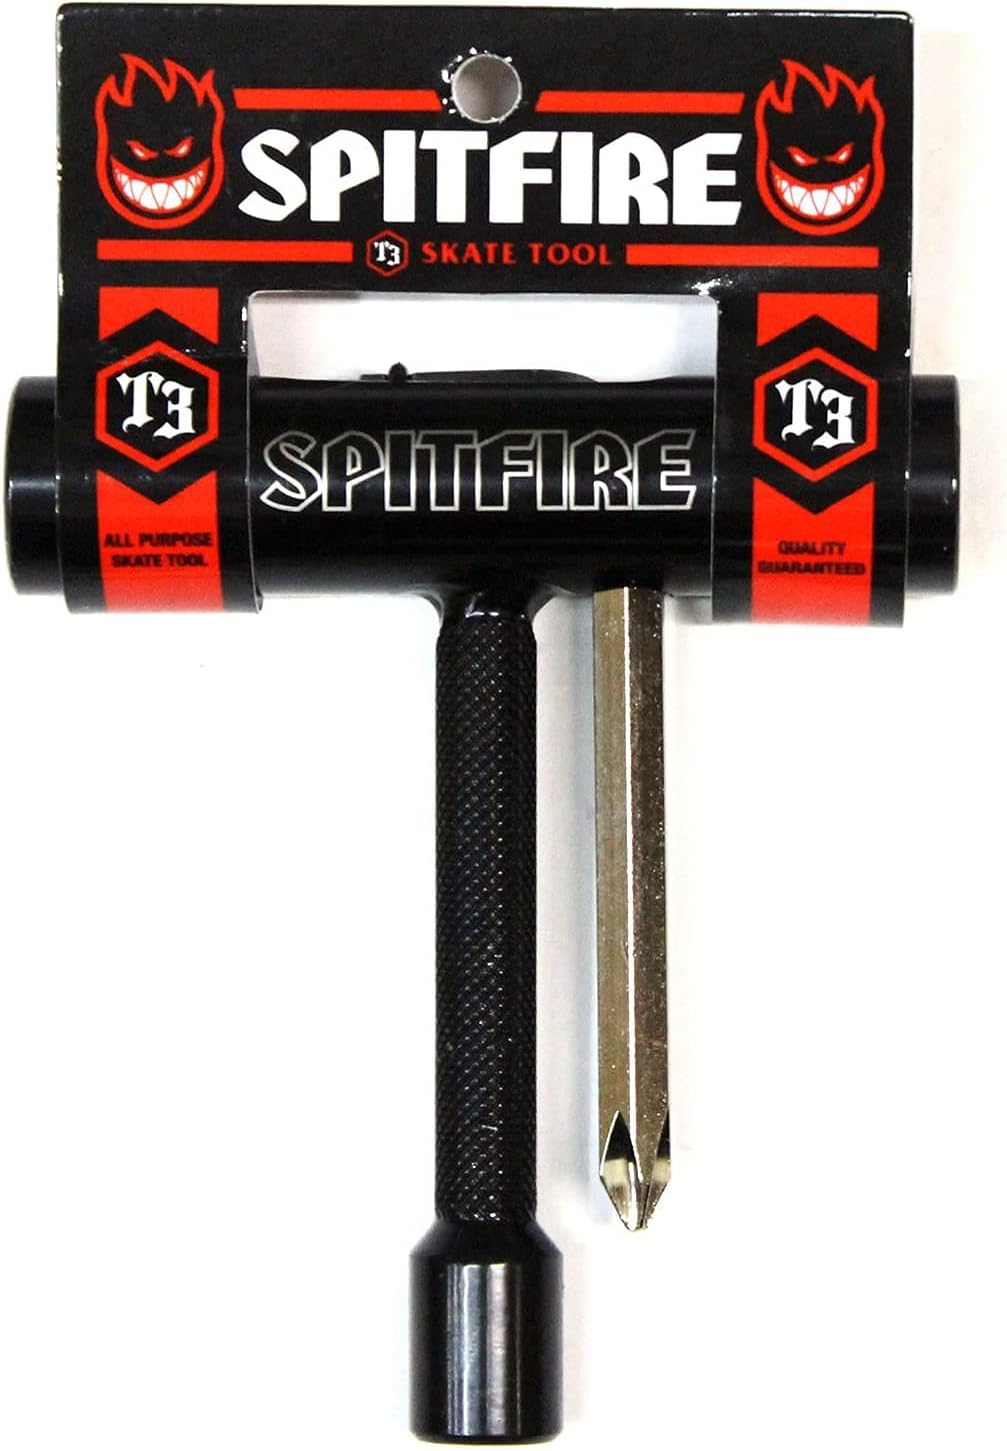 Spitfire T3 Skate Tool - Herramienta Skateboard | Herramientas de Skate | Skate Parts | Skate Shop | Tablas, Ejes, Ruedas,... | surfdevils.com